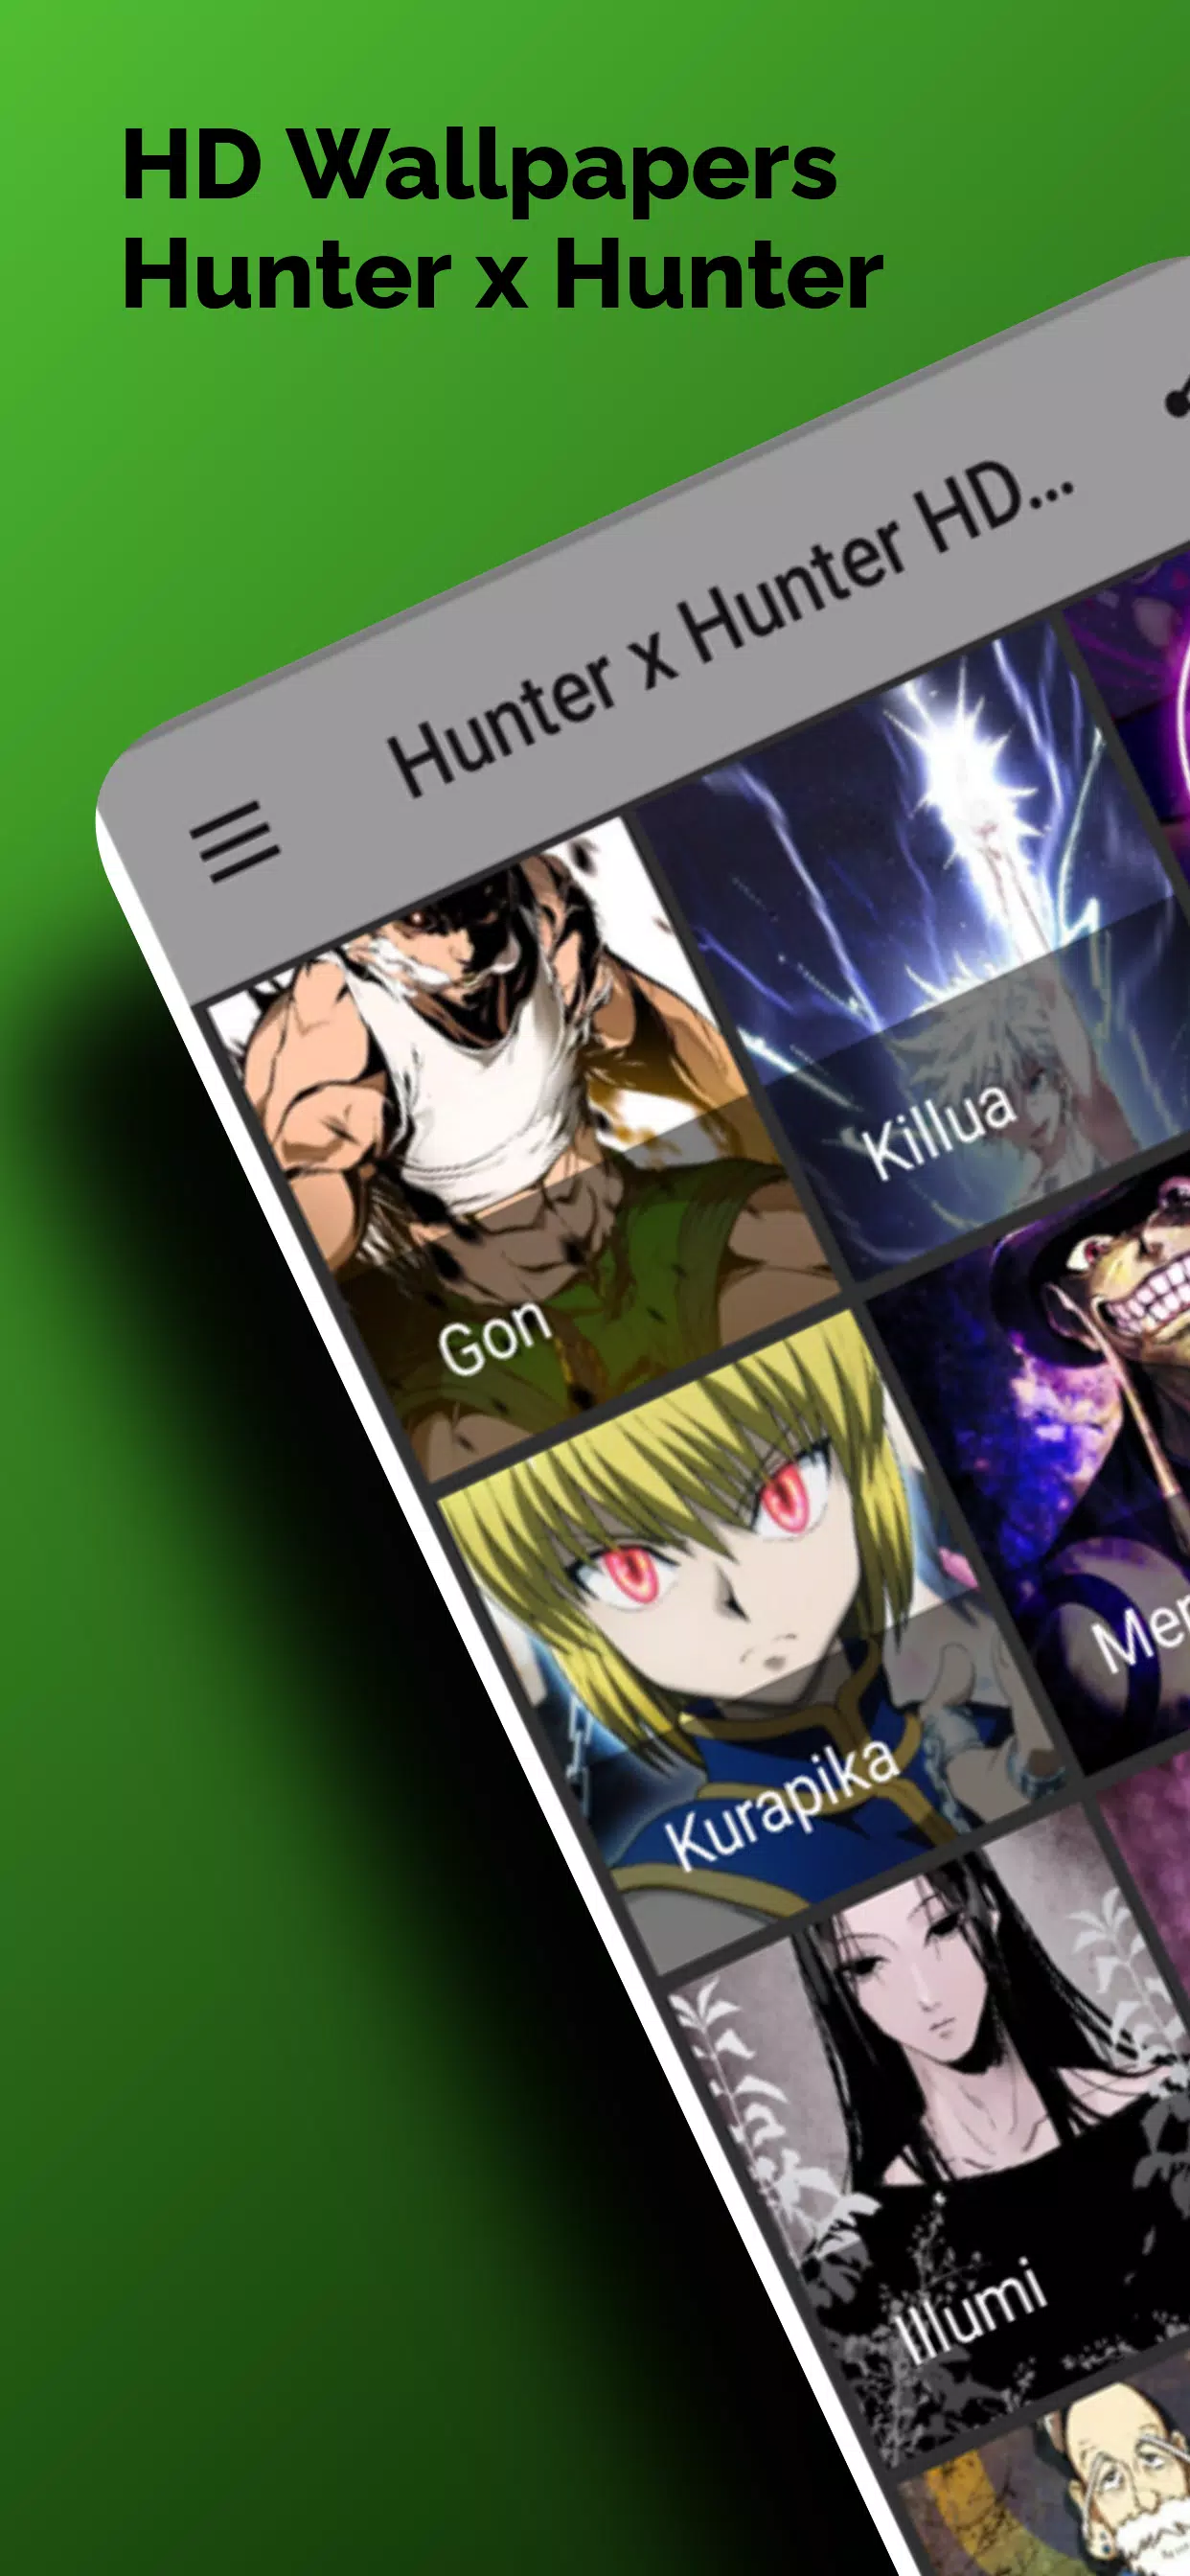 About: Hunter X Hunter Wallpaper (Anime Wallpaper Hd) (Google Play